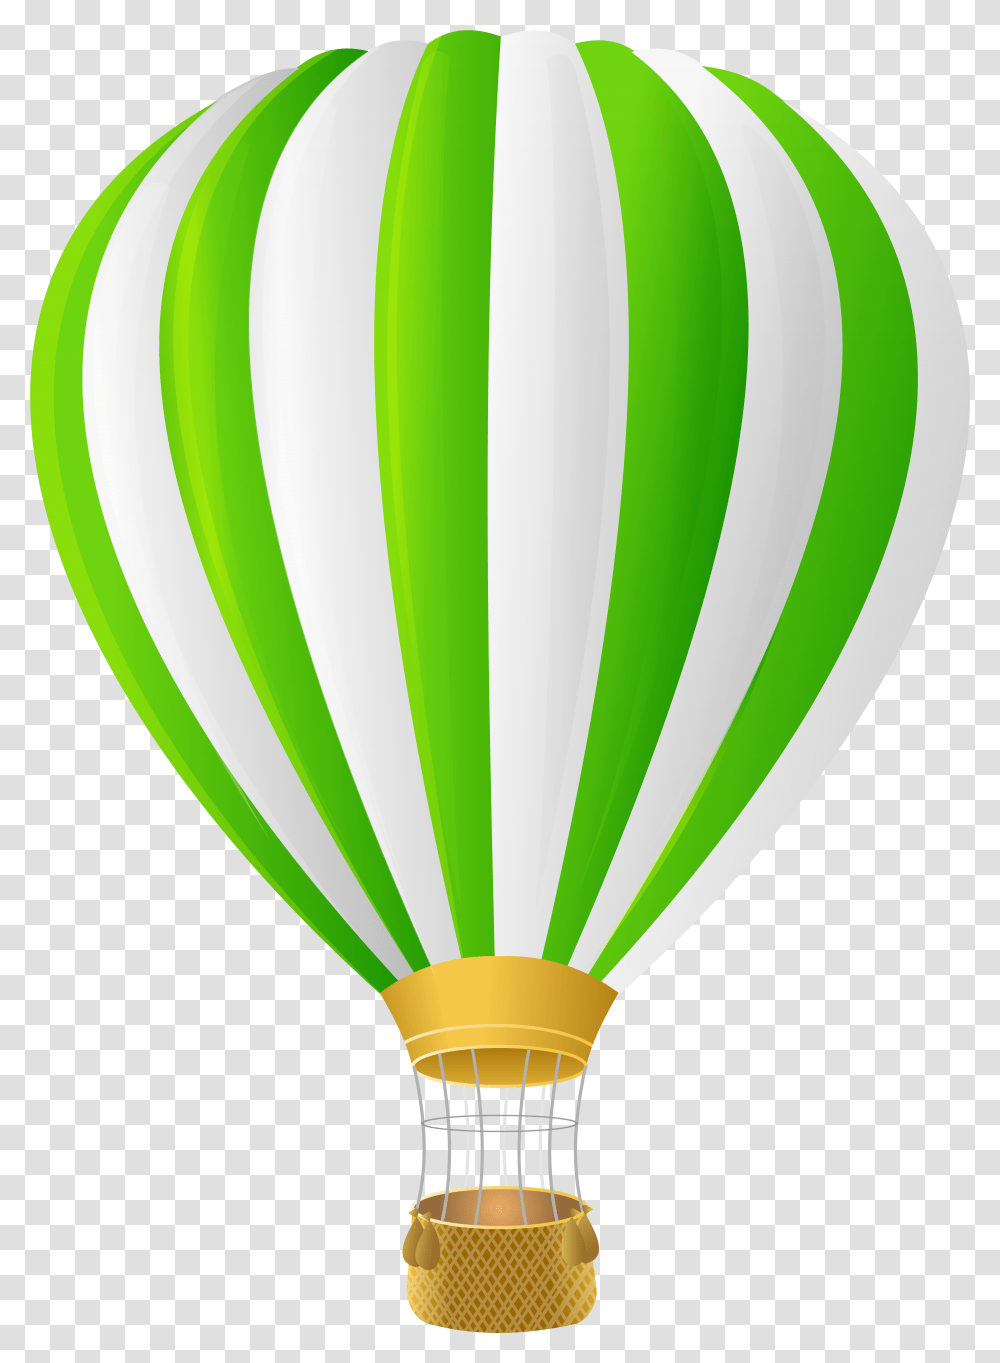 Hot Air Balloon Clipart At Getdrawings Hot Air Balloon Clipart Background, Aircraft, Vehicle, Transportation Transparent Png